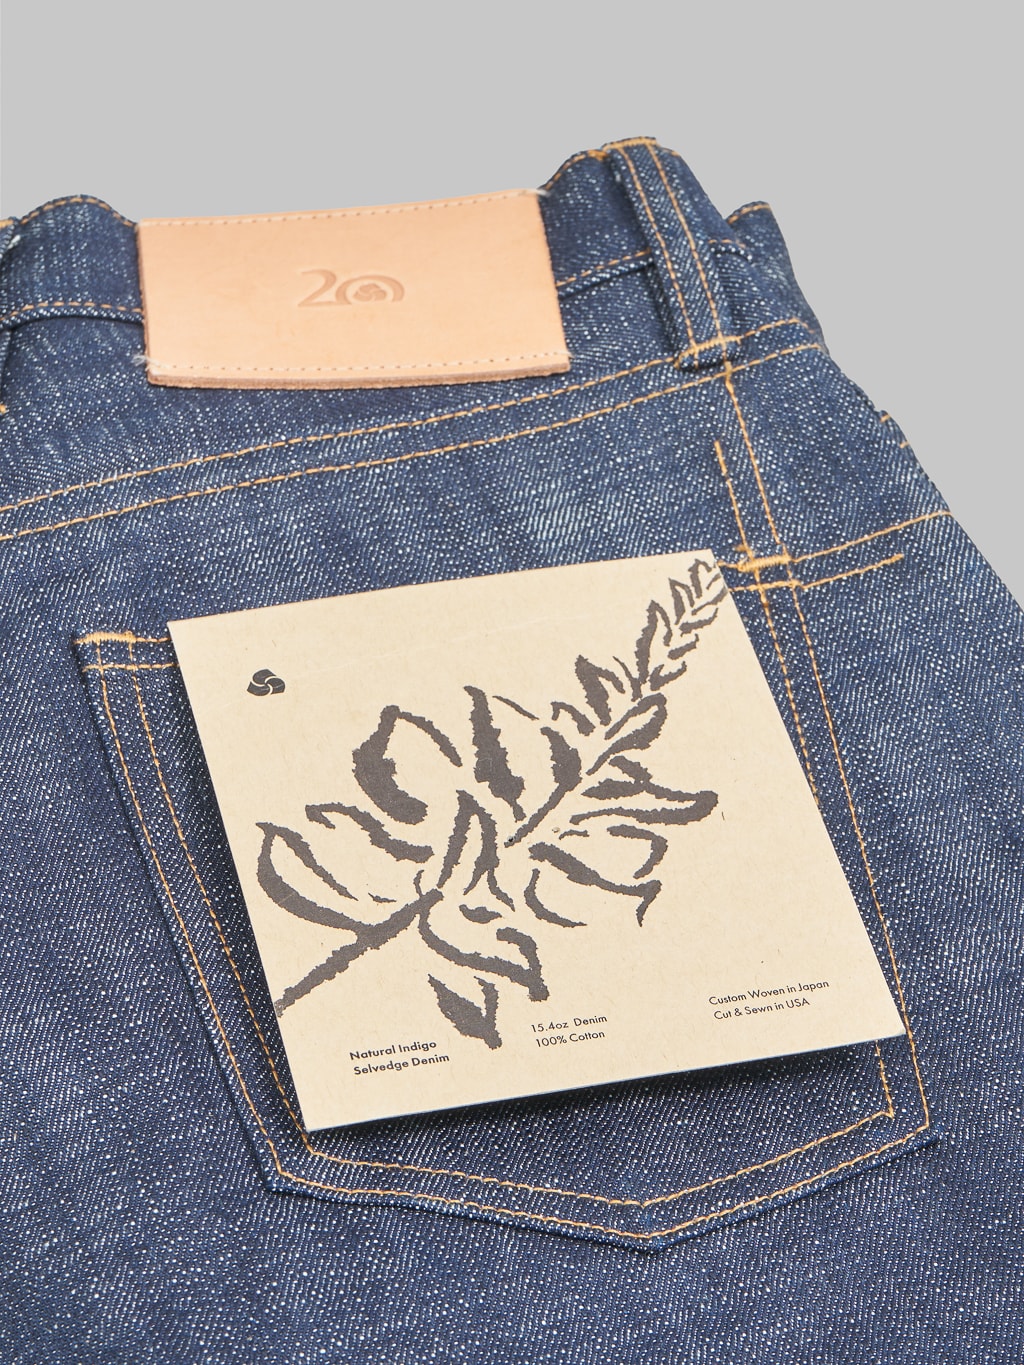 3sixteen CT 102xn 20th Anniversary Natural Indigo Jeans pocket flasher